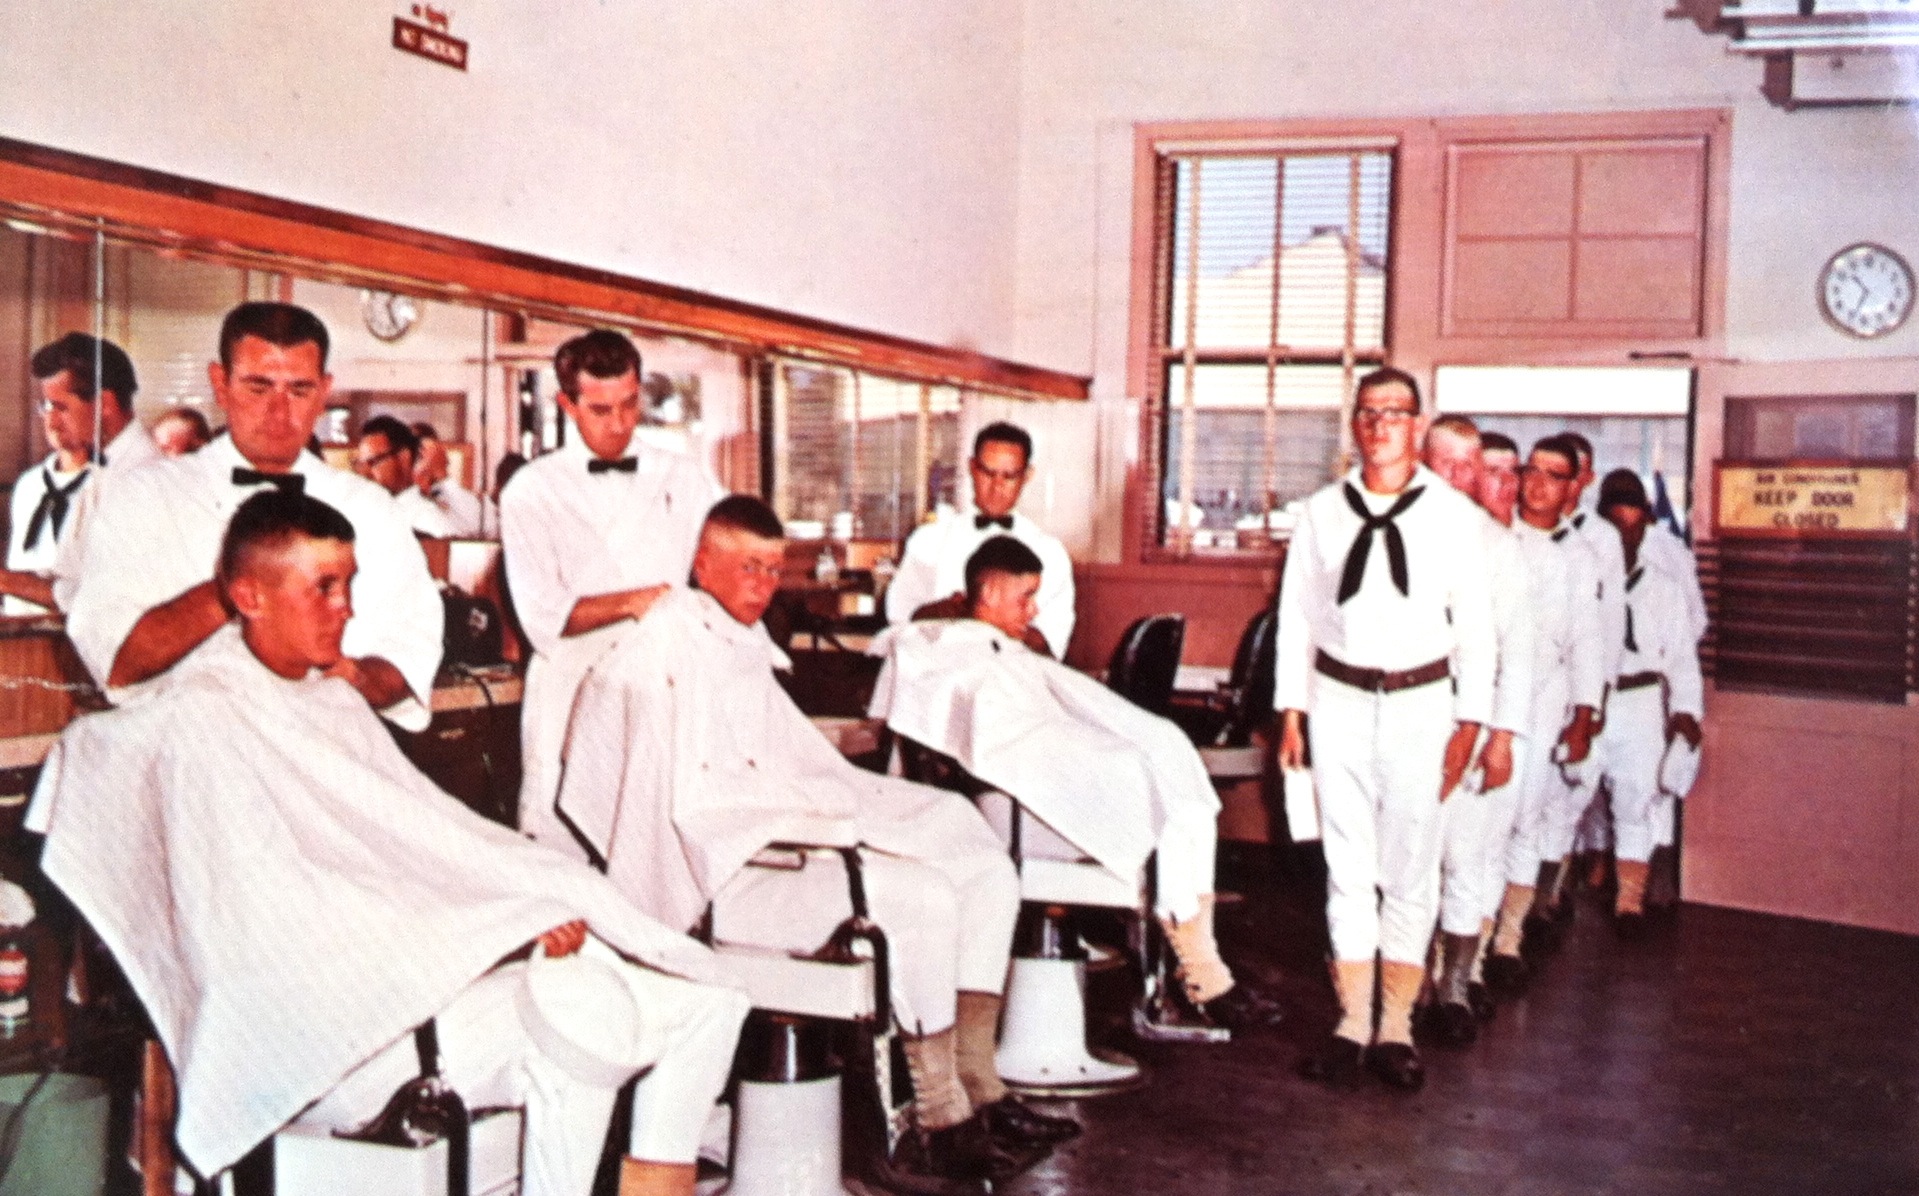 Naval Recruit Barber Shop